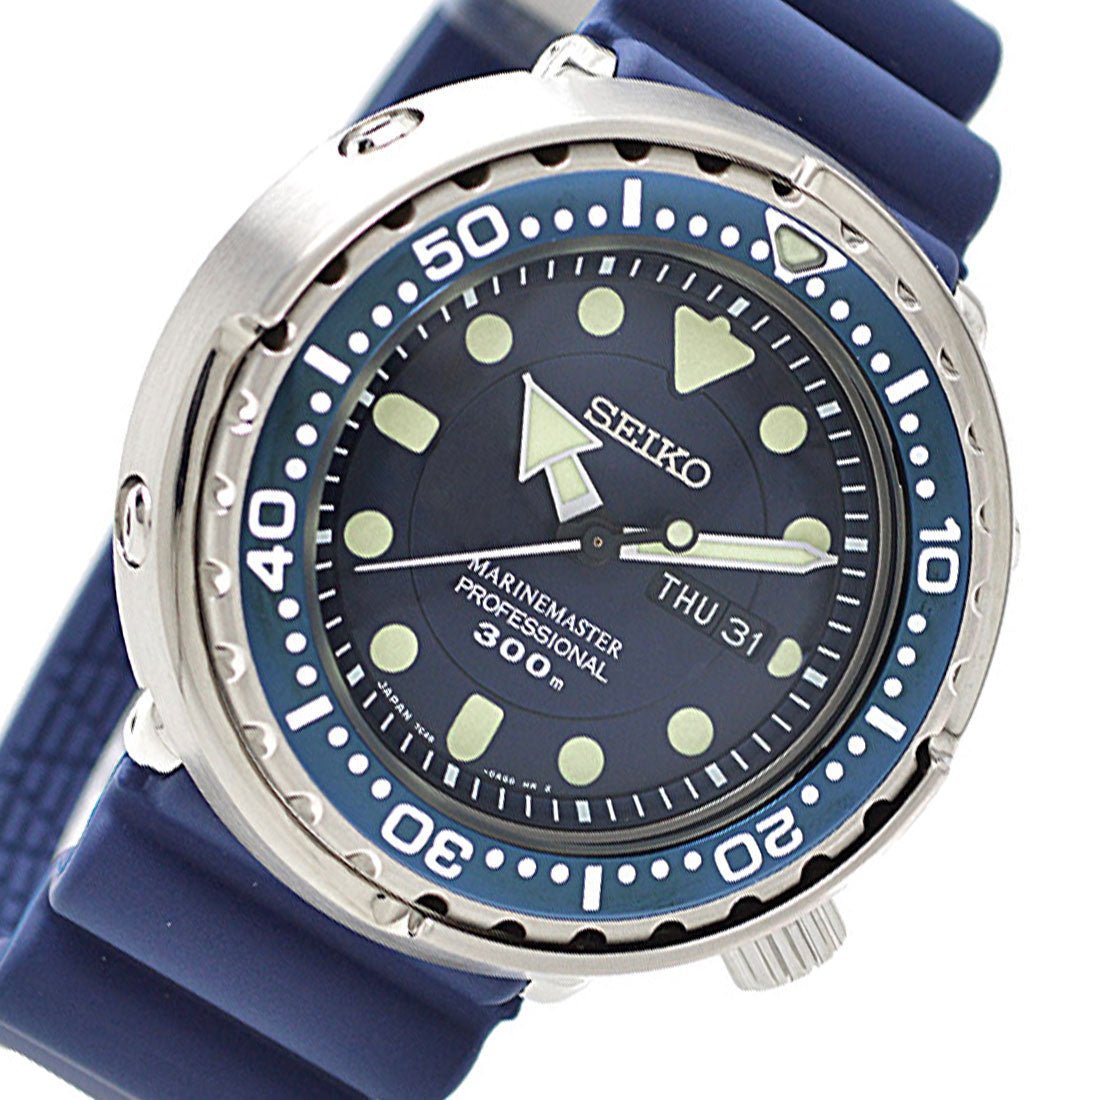 Seiko Tuna Marine Master JDM Divers Limited Edition Watch SBBN037 -Seiko